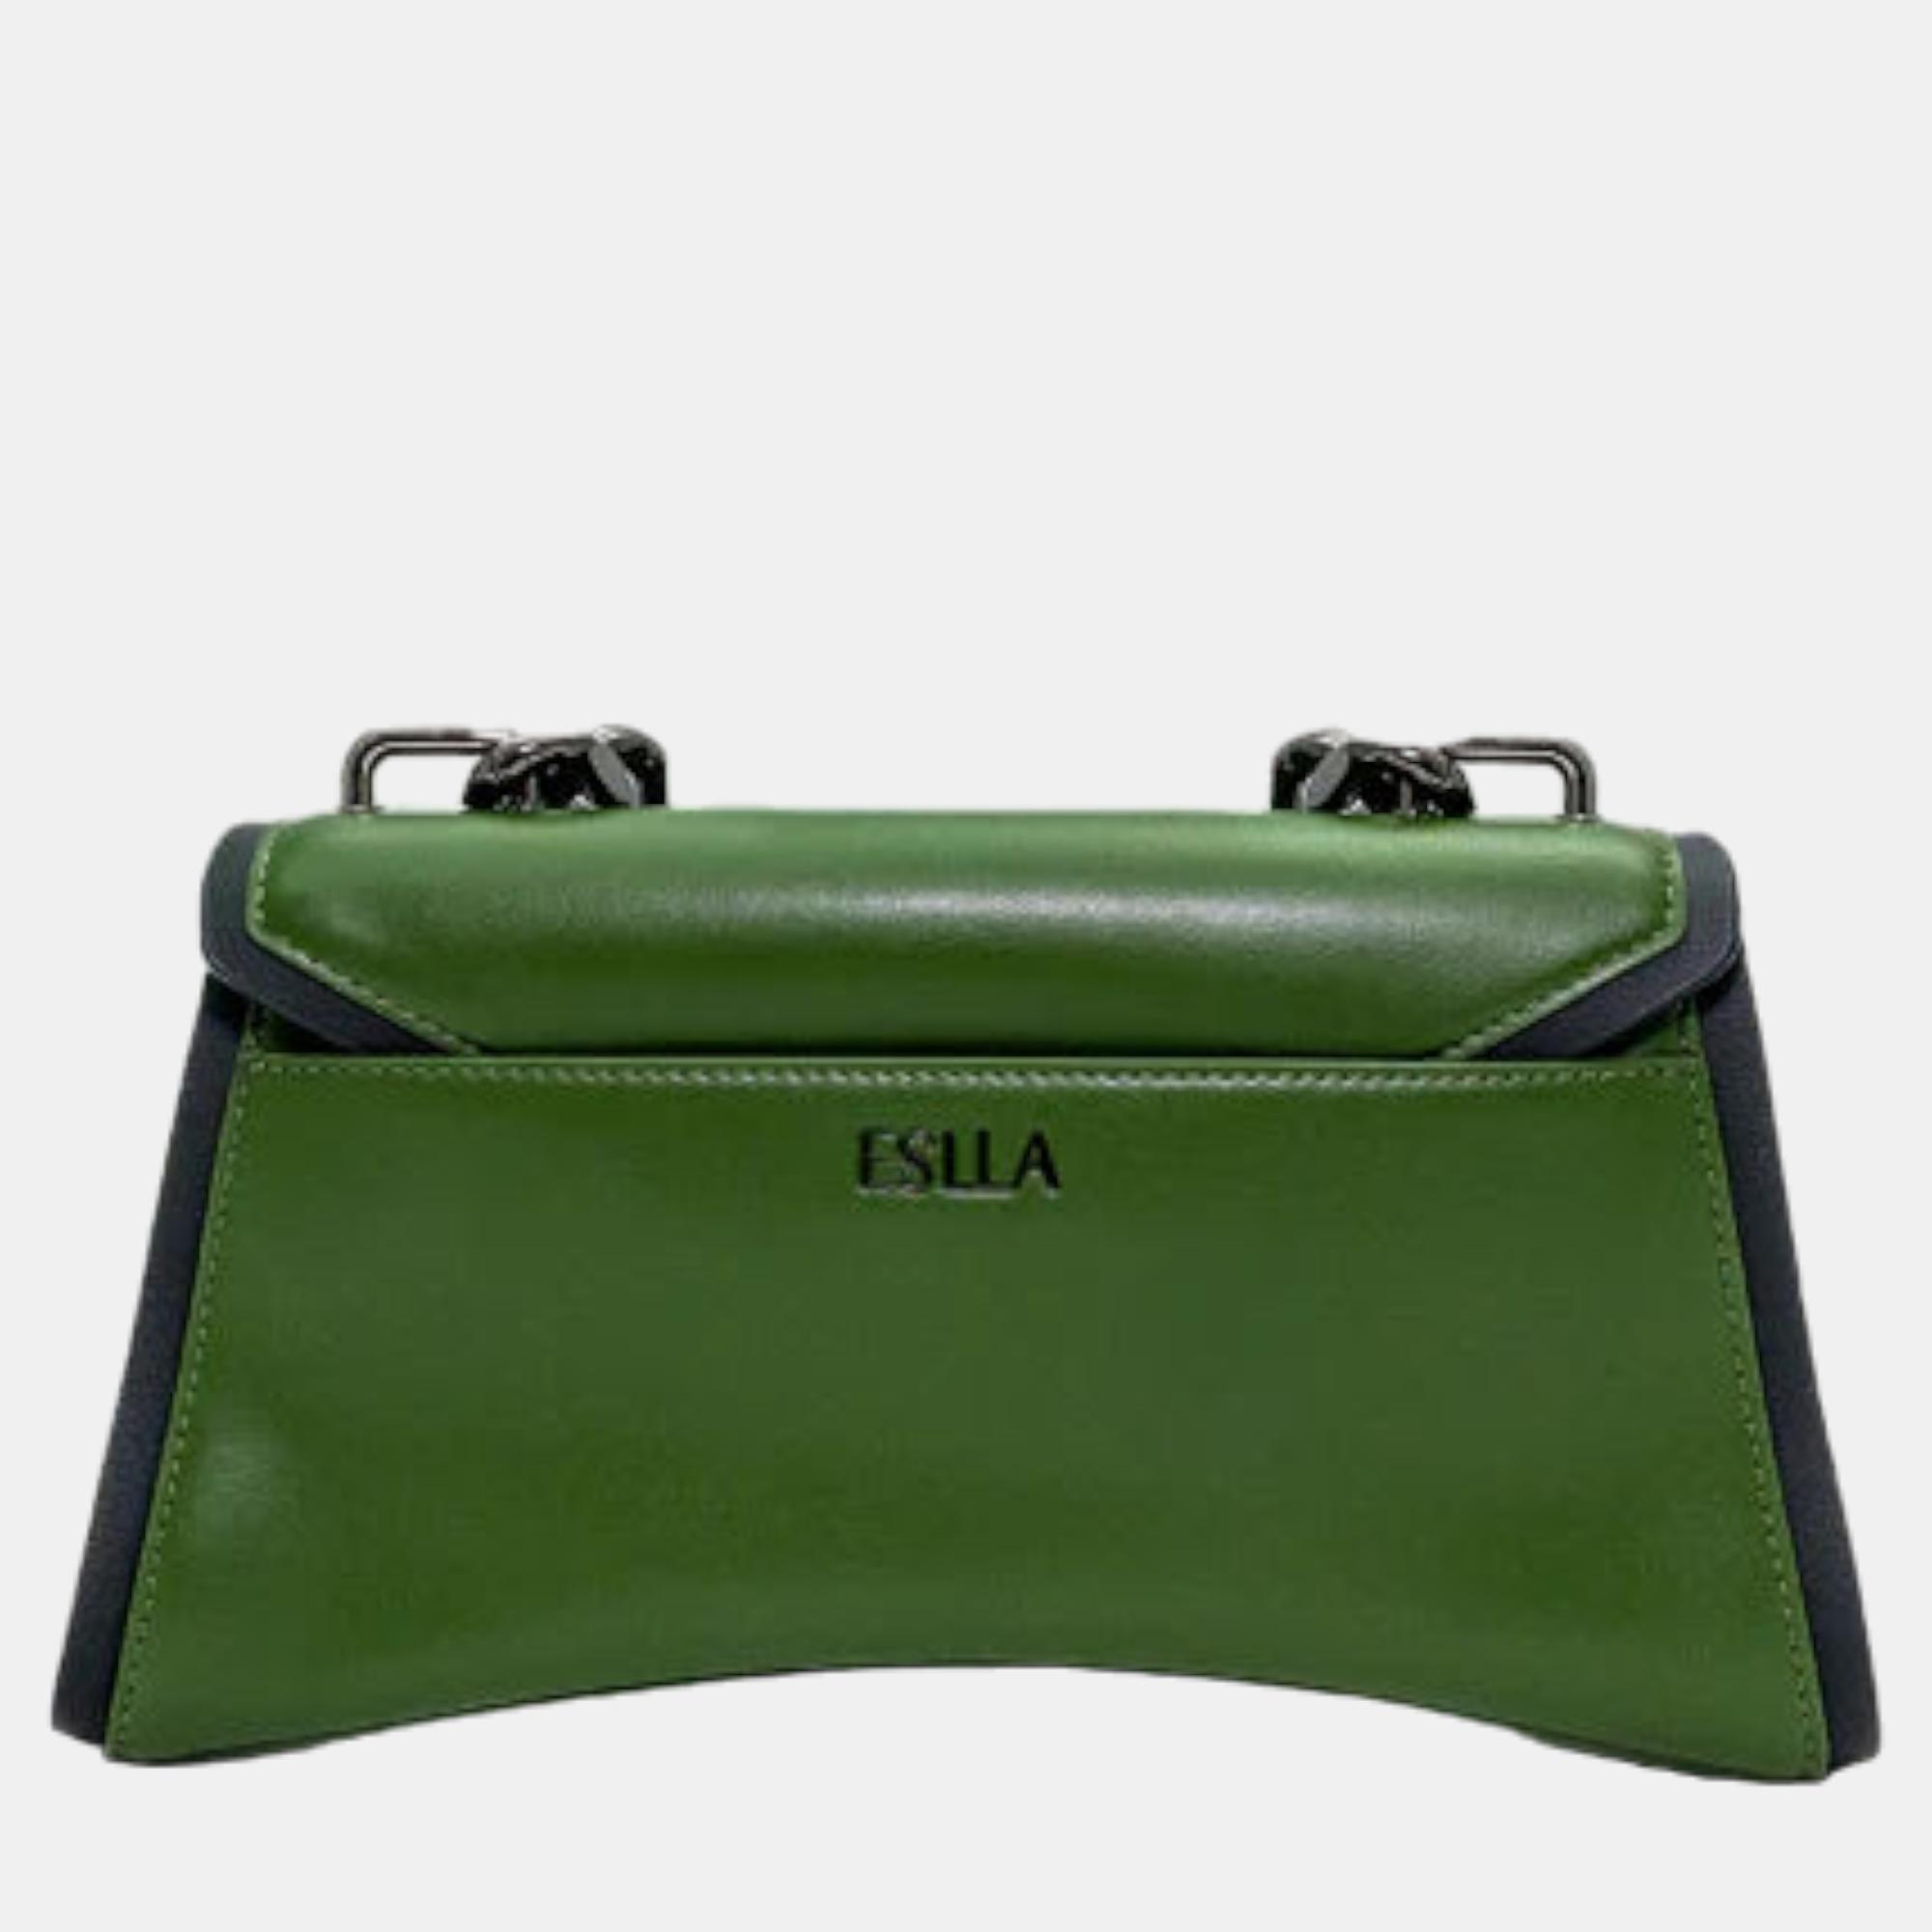 Eslla Dharma Green W Green Trim Shoulder Bag